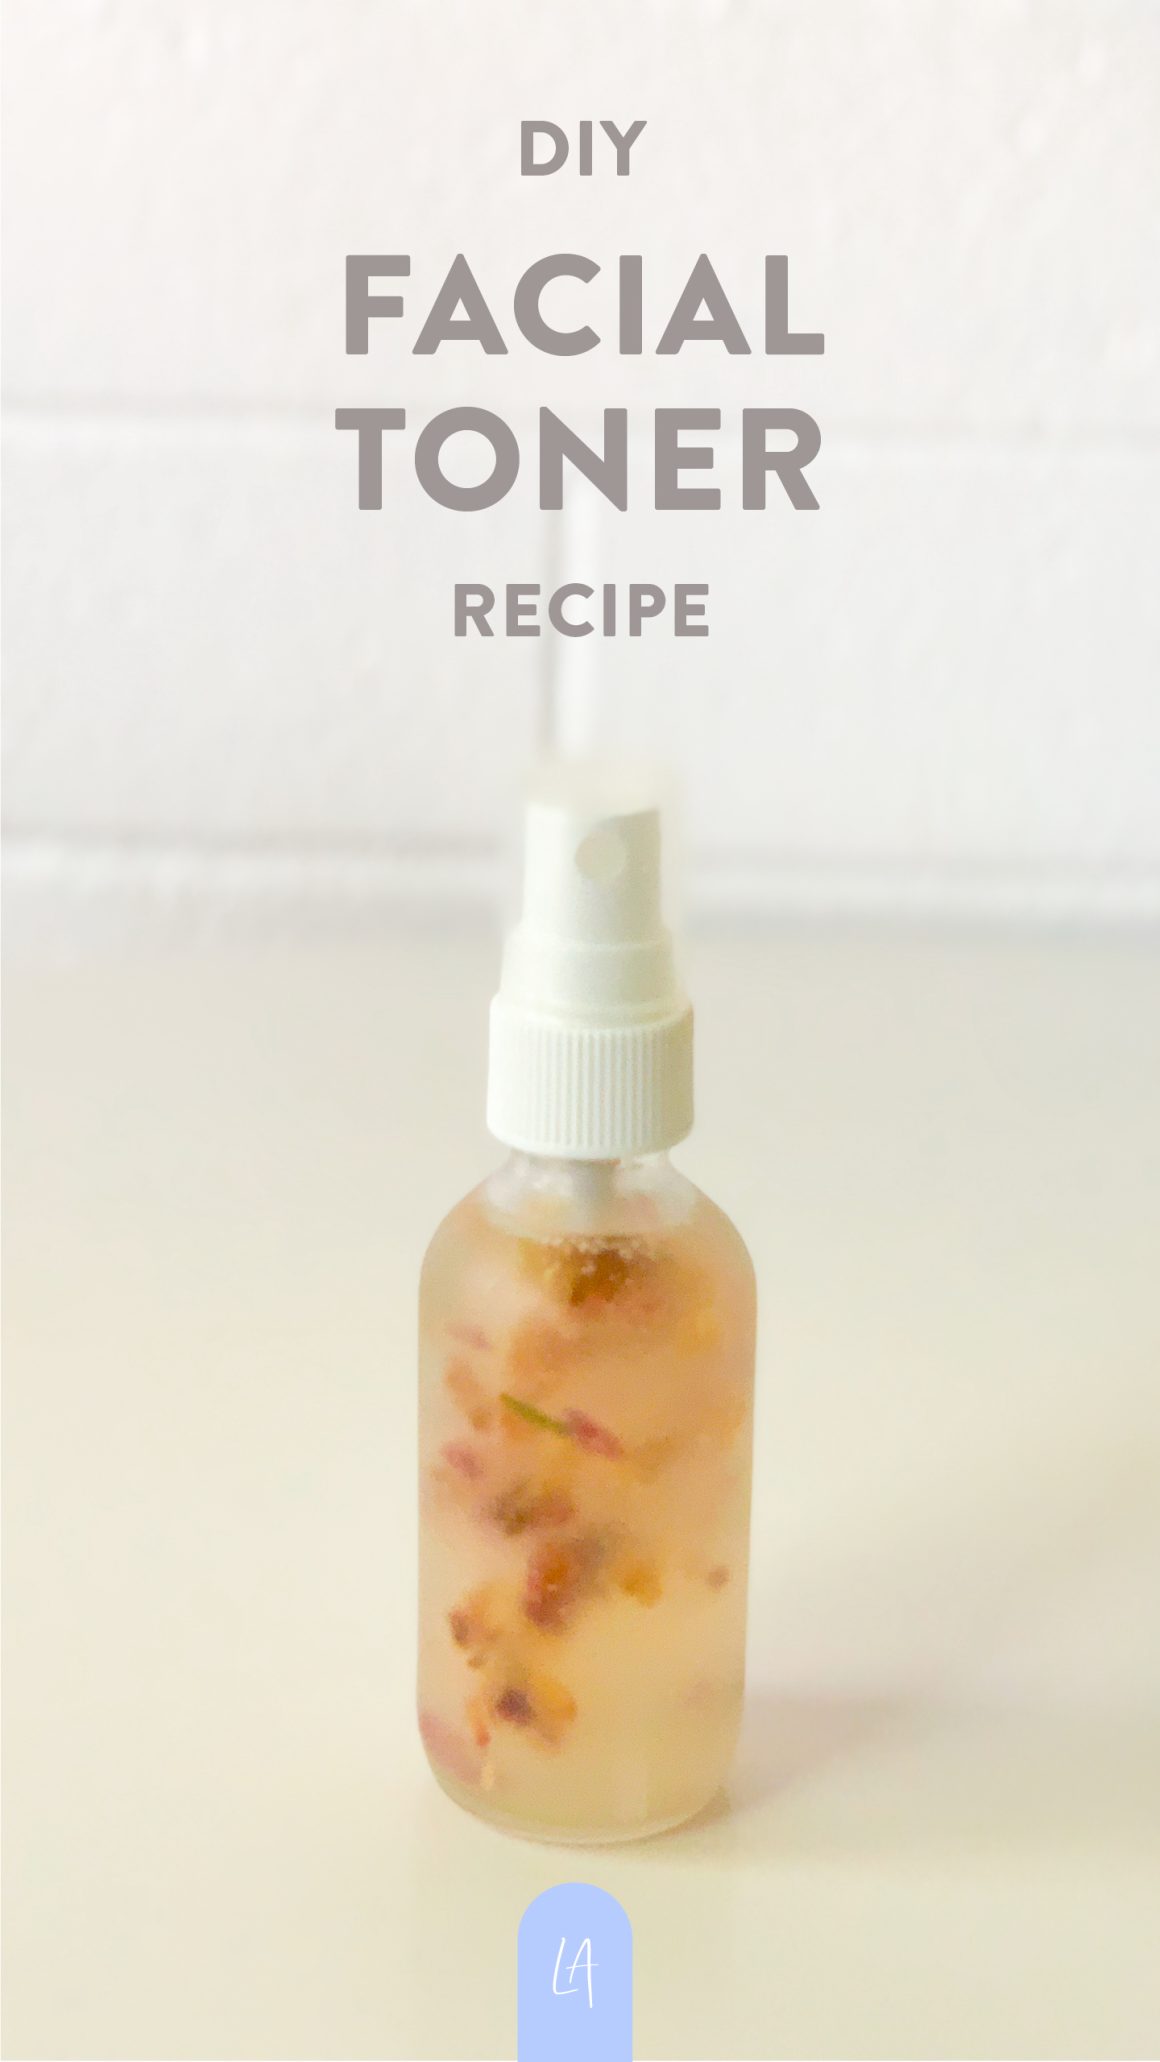 DIY Facial toner recipe | LAurenrdaniels | Toner spray bottle in flat lay amongst other drawer items